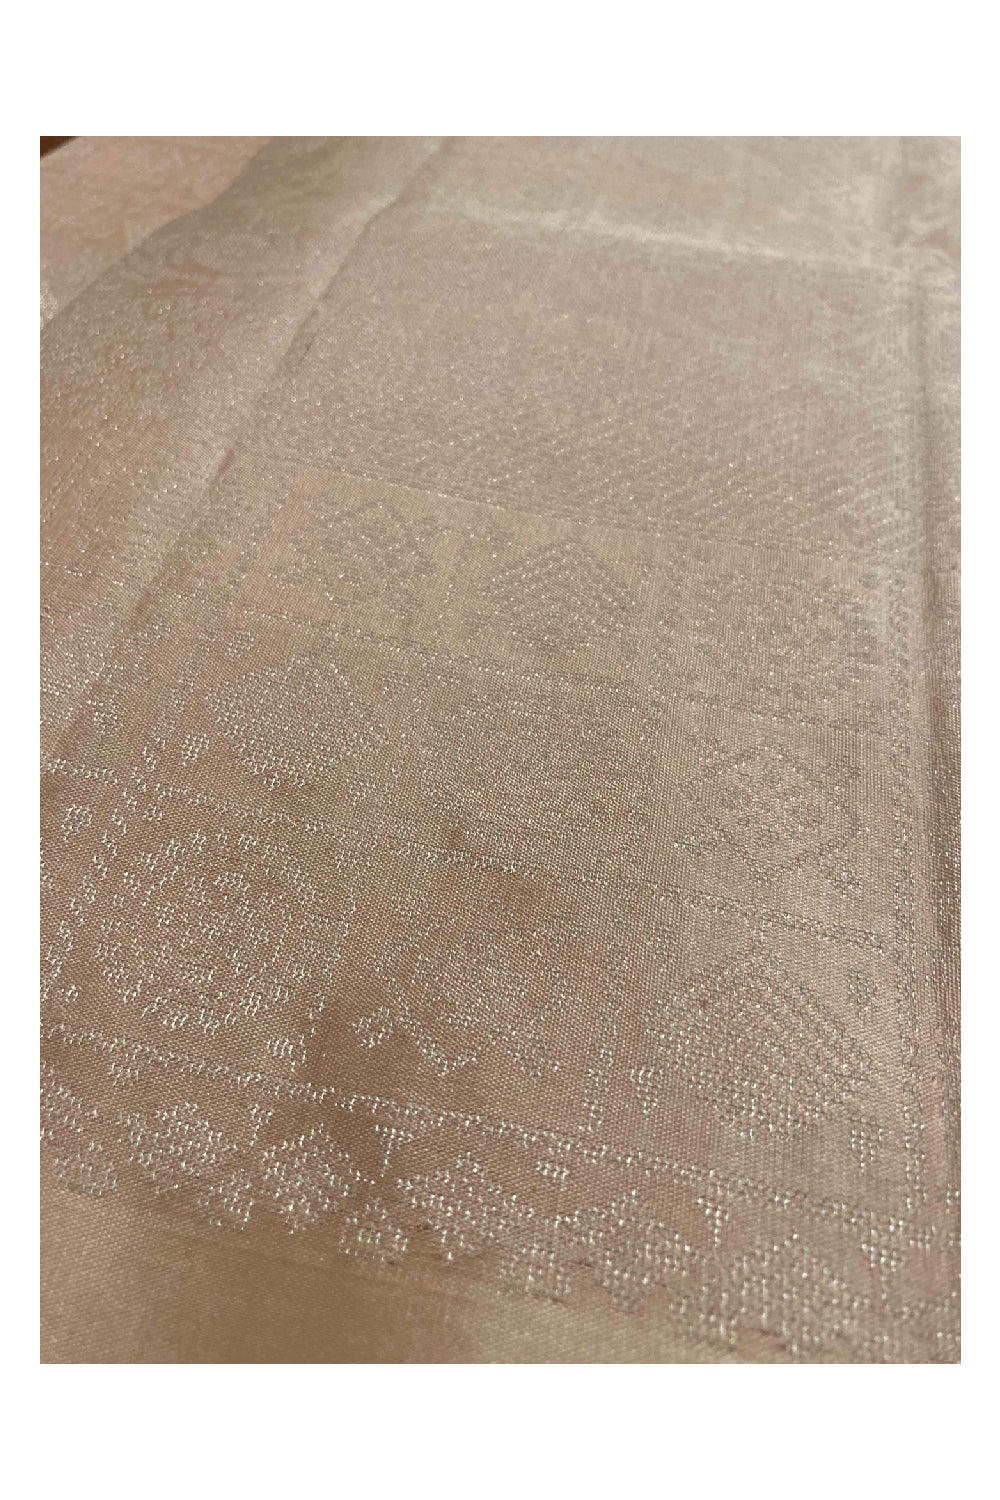 Southloom Handloom Pure Silk Manthrakodi Kanchipuram Saree in Single Peach Bronze Colour and Silver Zari Motifs